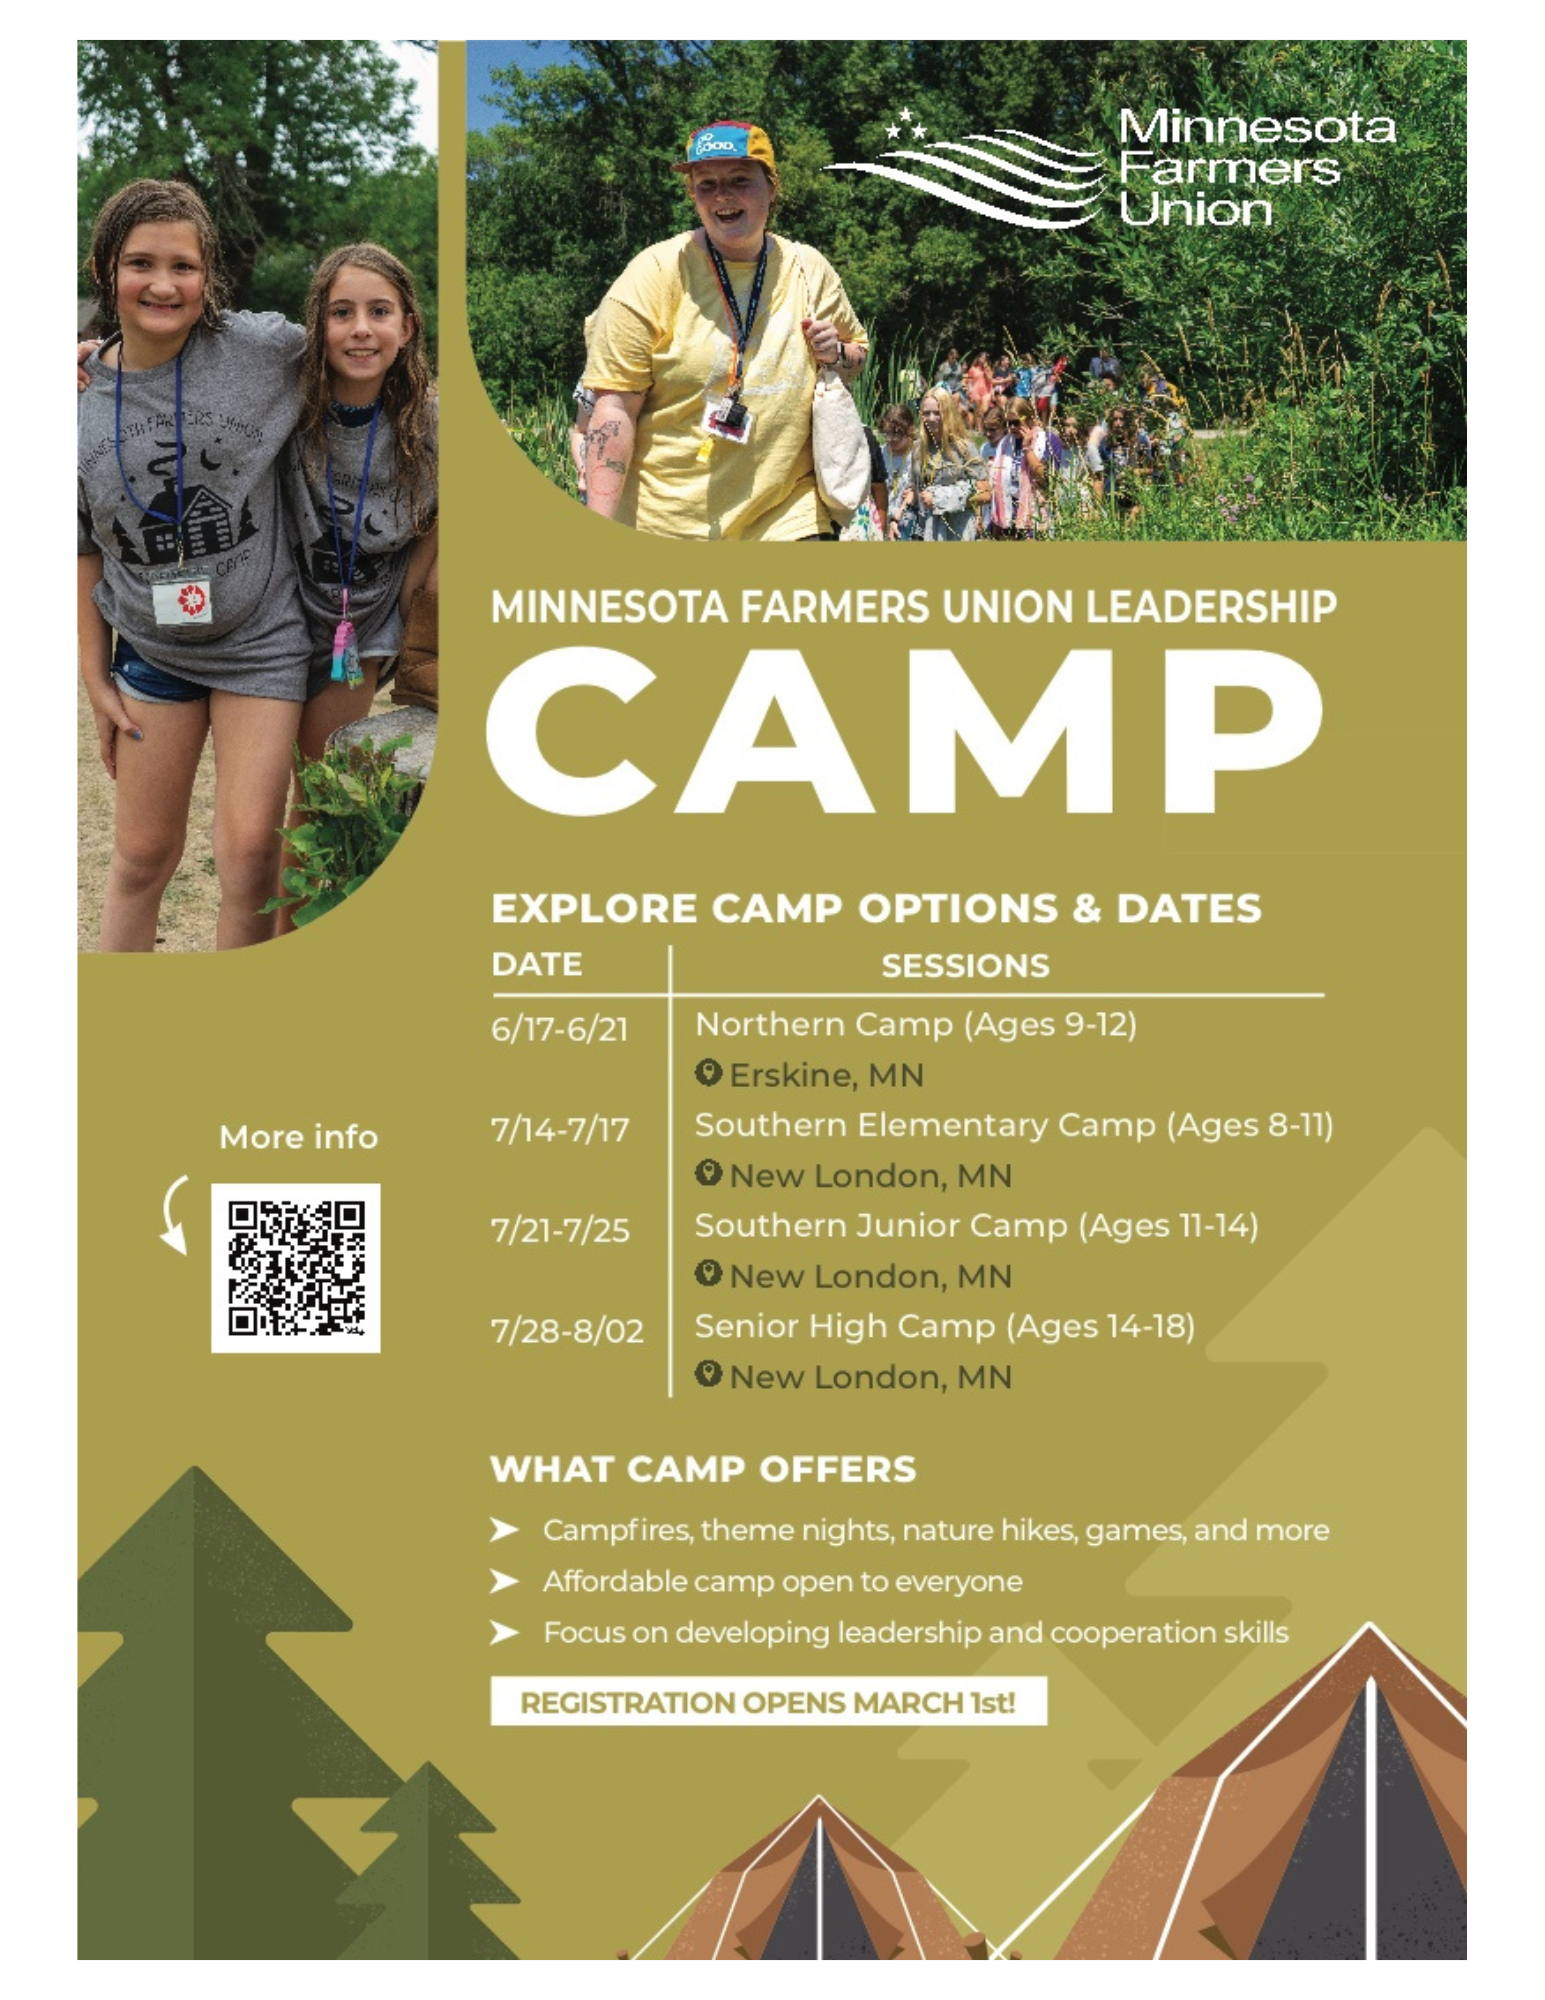 MFU summer camp for kids, youth leadership camp